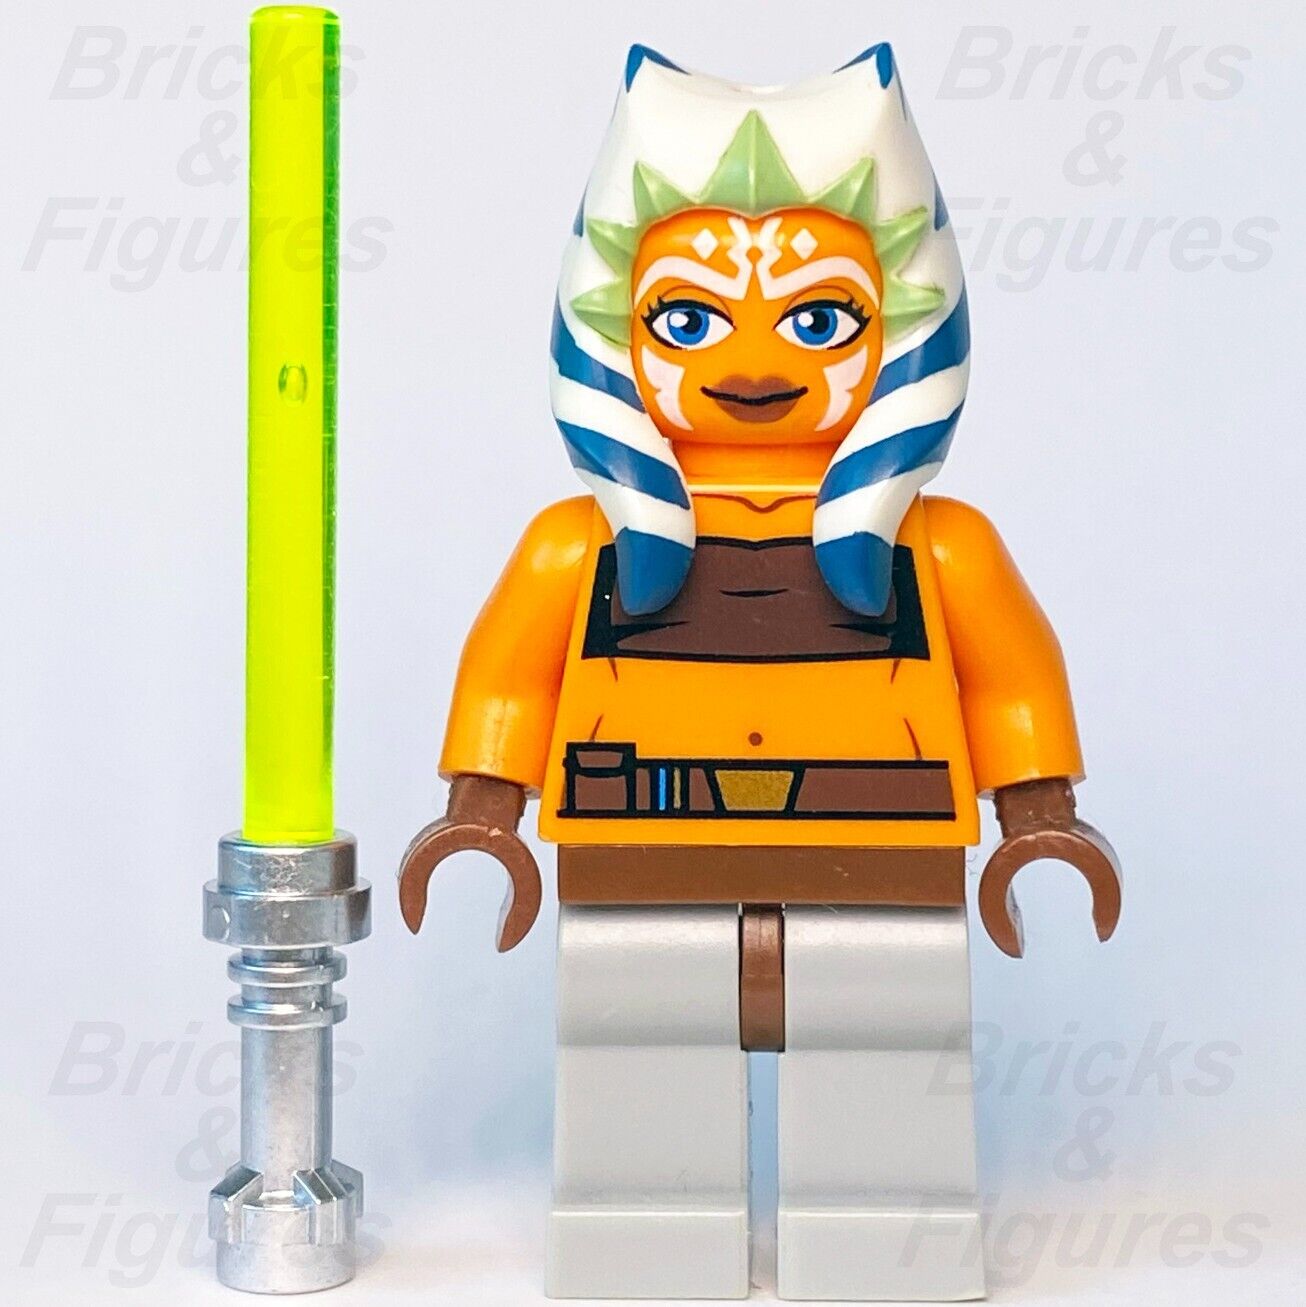 LEGO Star Wars Ahsoka Tano Minifigure Jedi Padawan The Clone Wars 7751 sw0192 2